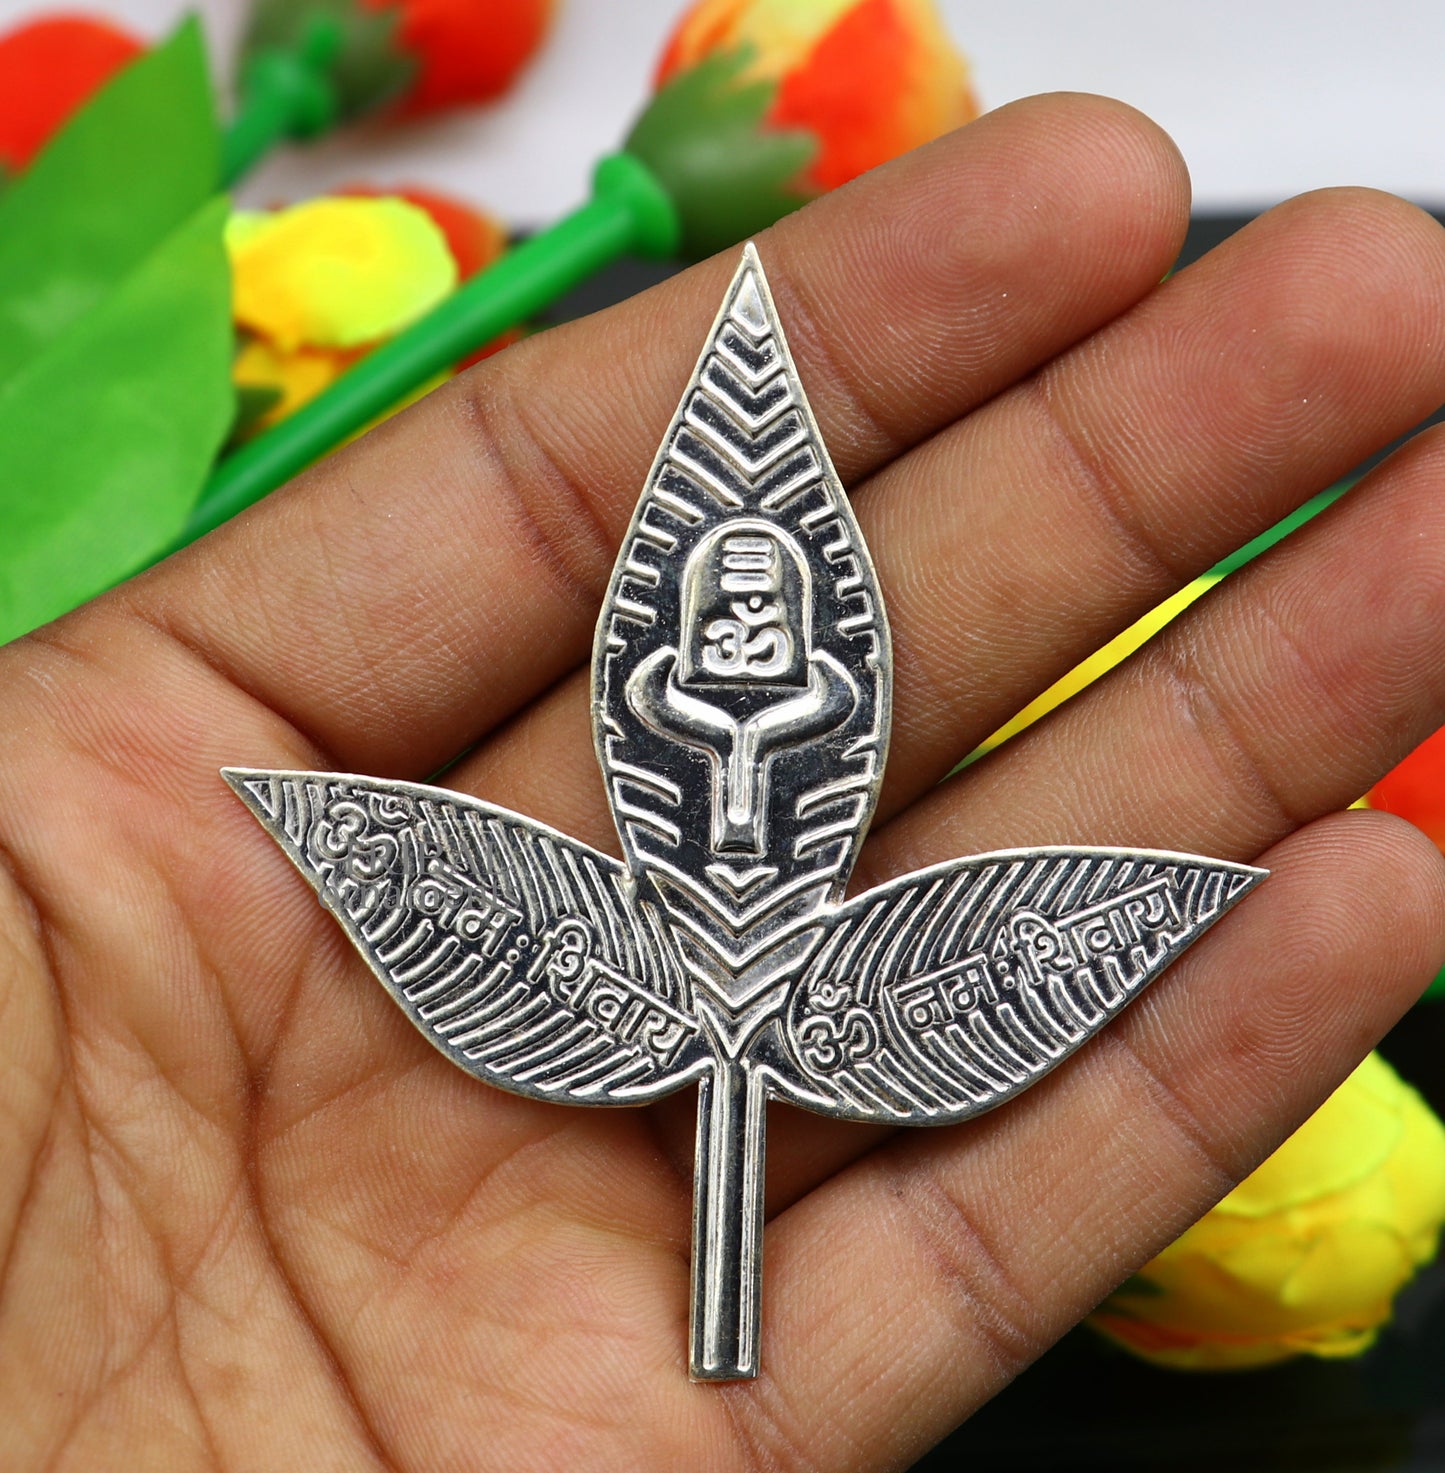 3" Lord Shiva bel Patra Solid silver handmade solid belva patra, shiva worshipping/ puja article, bel tree leaves for puja su674 - TRIBAL ORNAMENTS